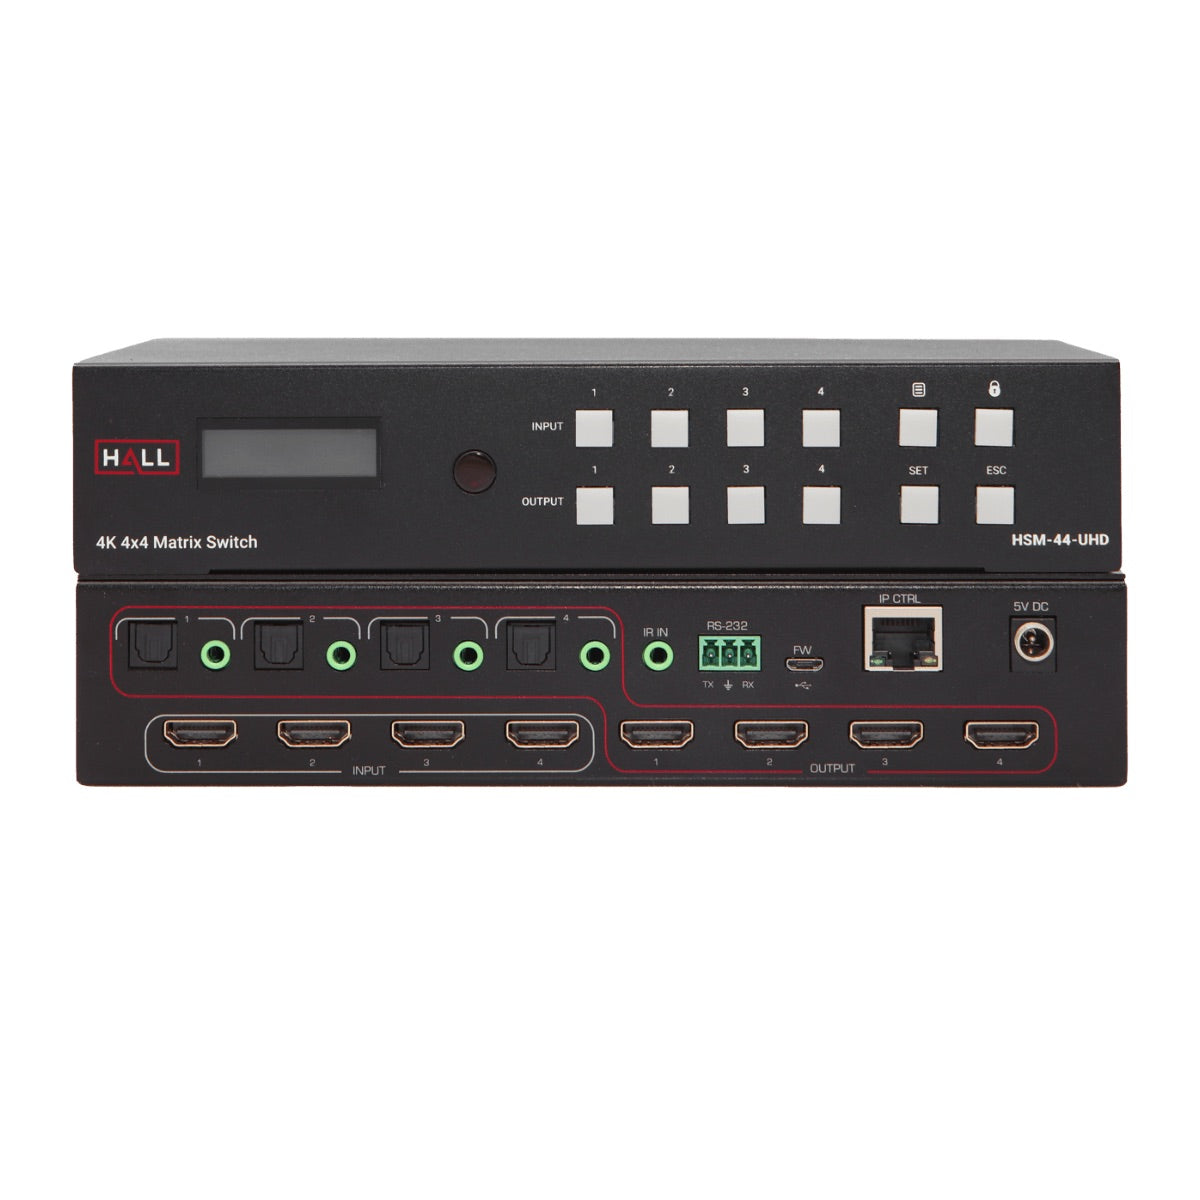 Hall Technologies HSM-44-UHD - 4K 4x4 Matrix Video Switcher, front and rear views